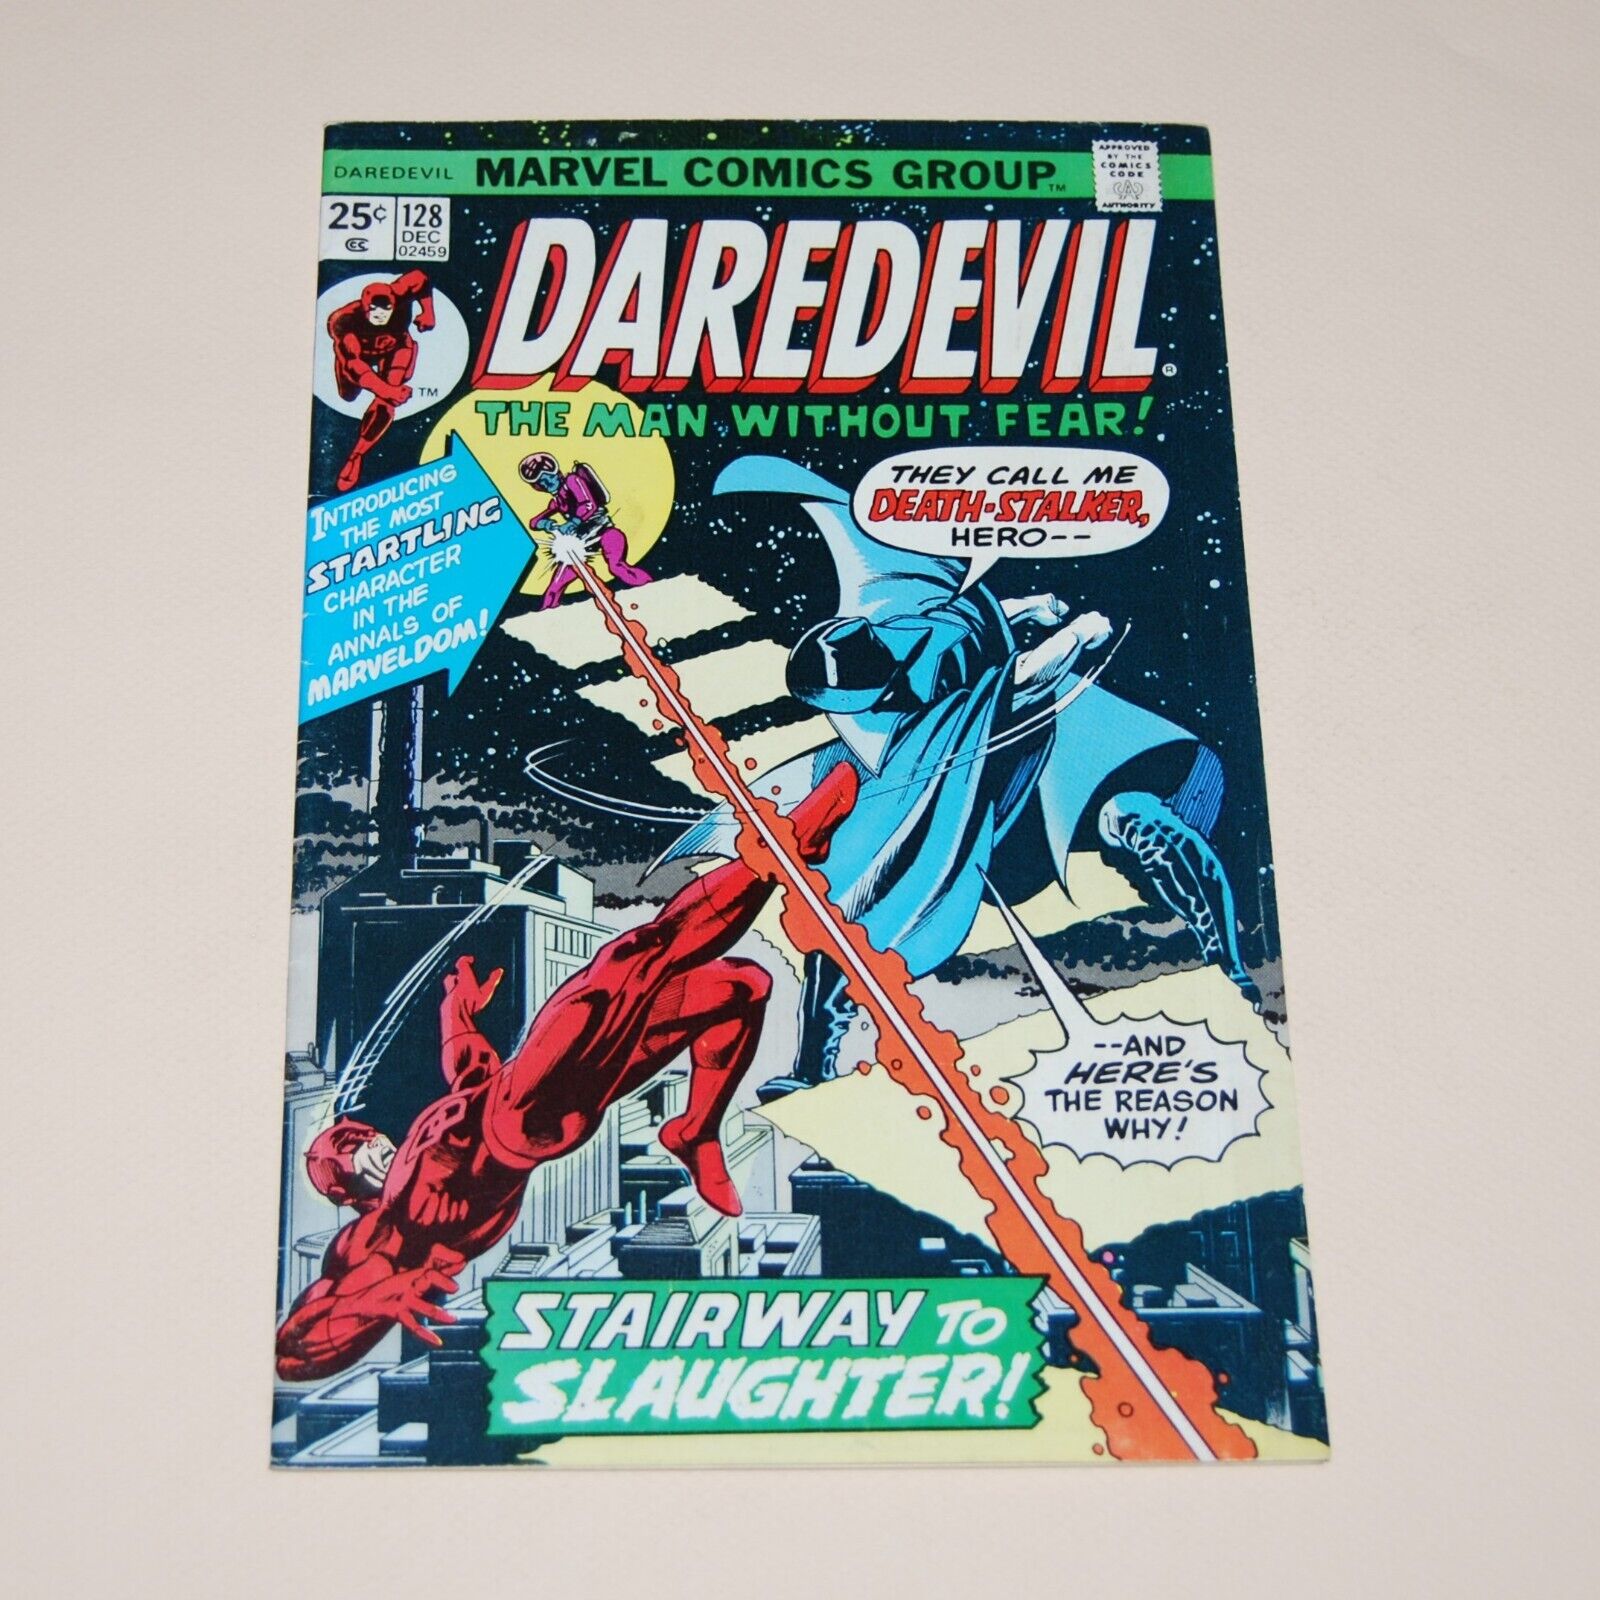 DAREDEVIL 128 (Marvel, December 1975) - 7.0 FN/VF condition